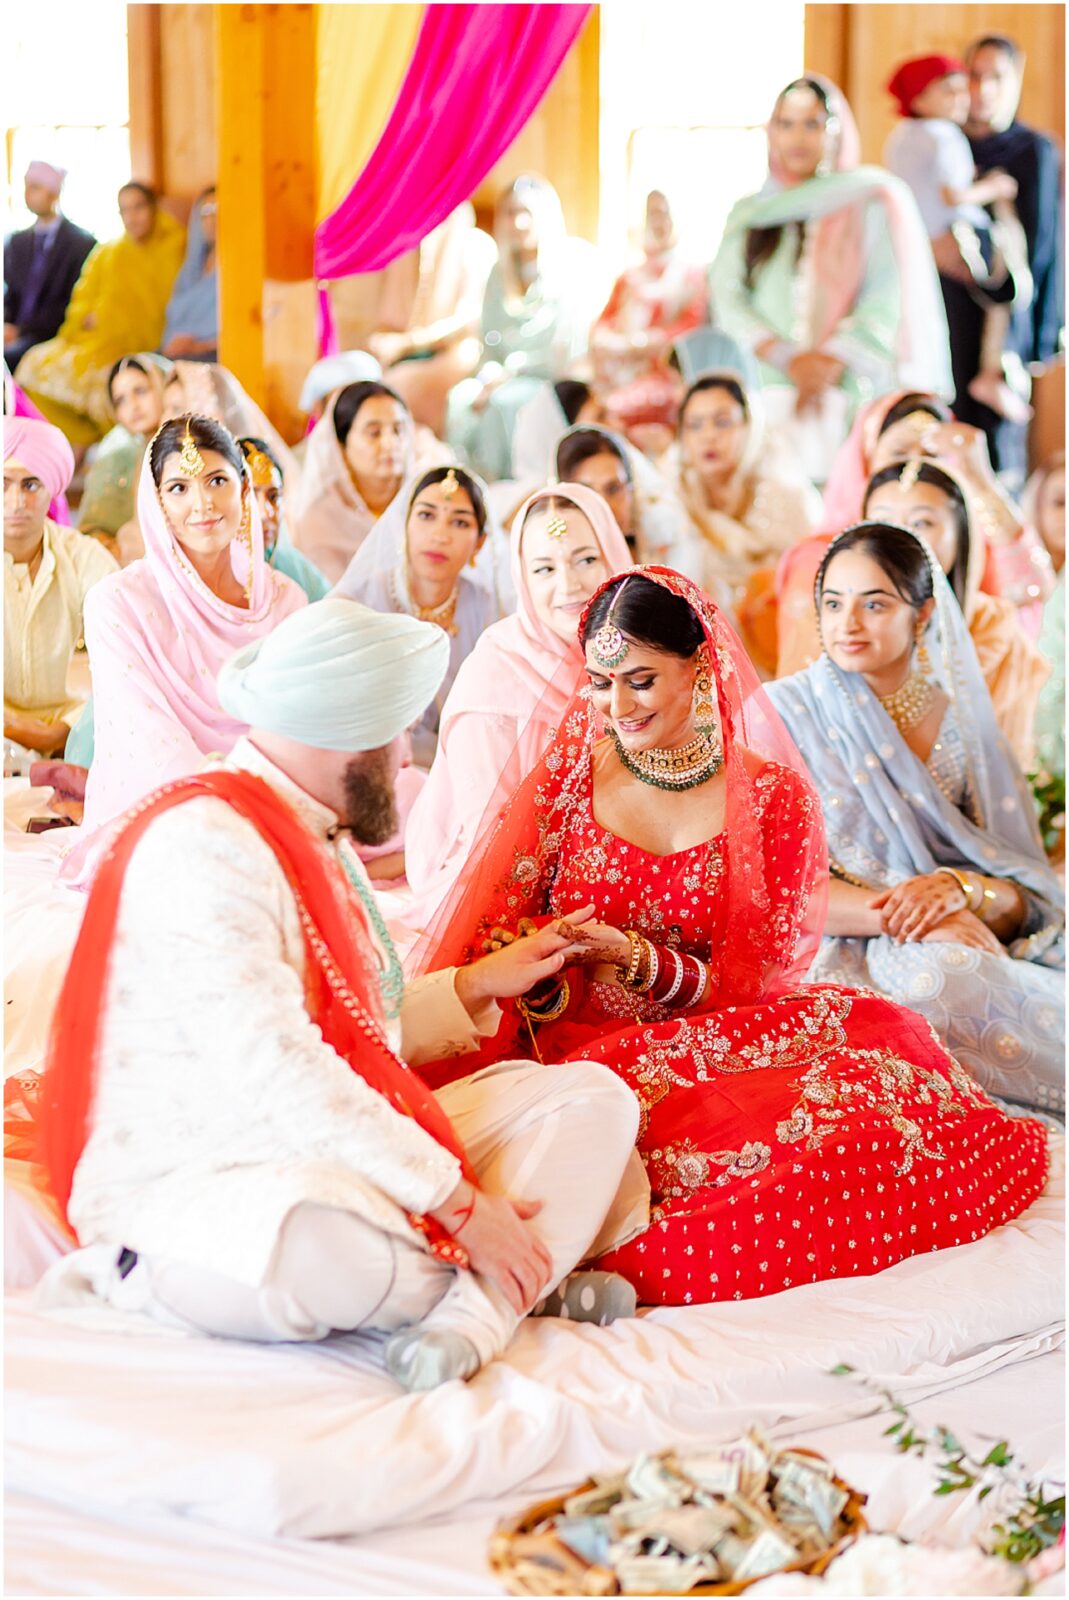 Mesmerizing South Asian Bridal Portraits - Indian Fusion Sikh Wedding Extravaganza at Kansas Mildale Farms, complete with Sangeet, henna, baraat, dholi, captured by Mariam Saifan Photography, the Premier Kansas City Wedding Photographer